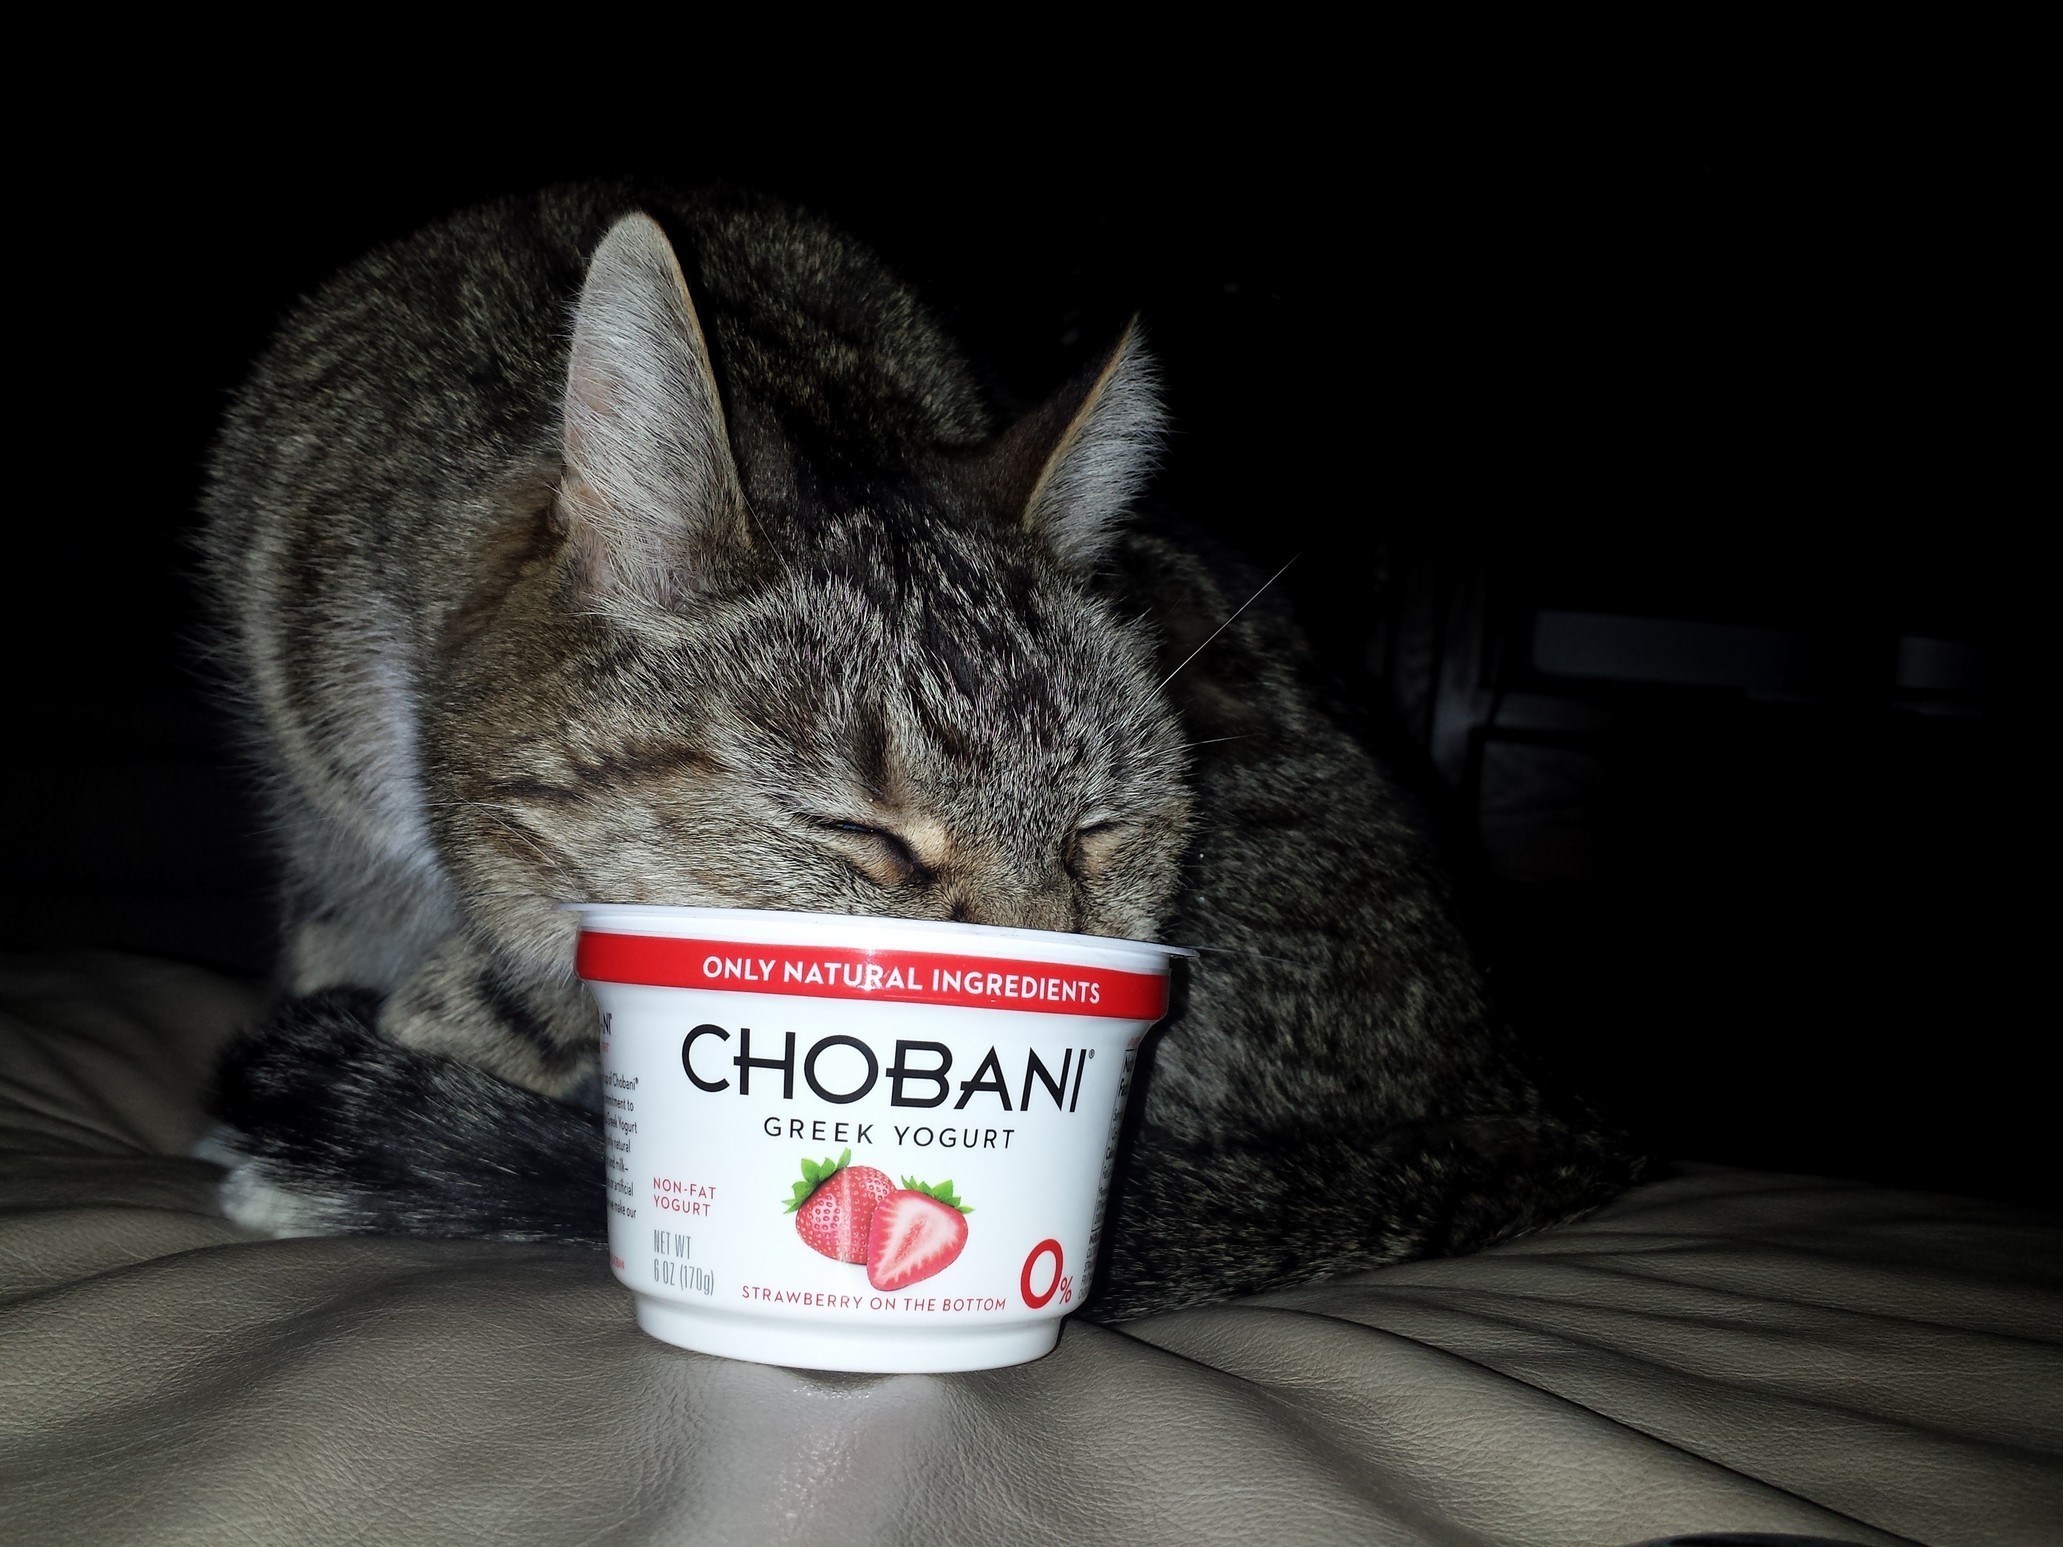 I think he really likes his yogurt.